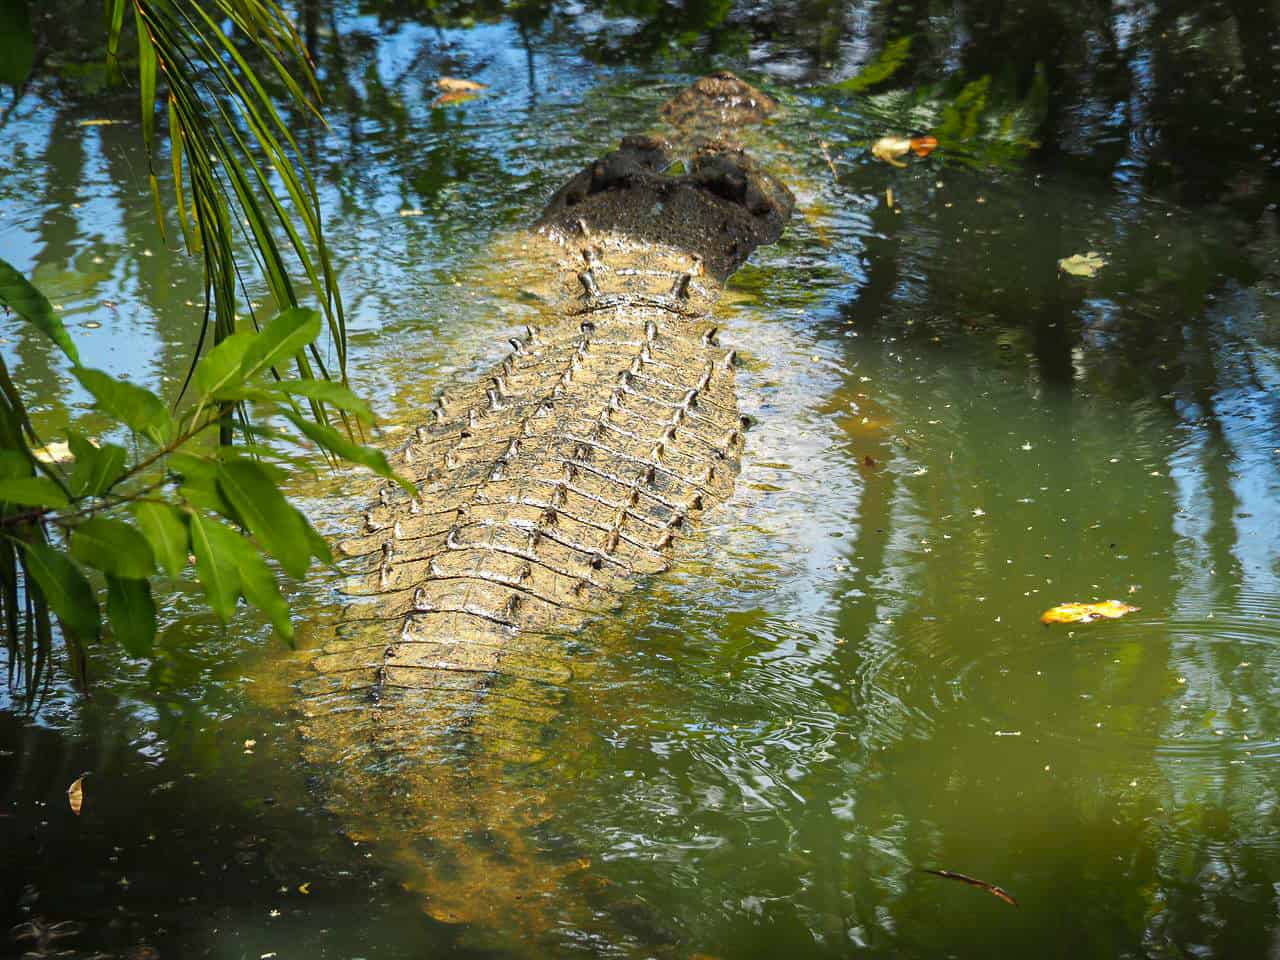 A saltwater crocodile at Wildlife Habitat in Port Douglas, Queensland - Australia // Travel Mermaid